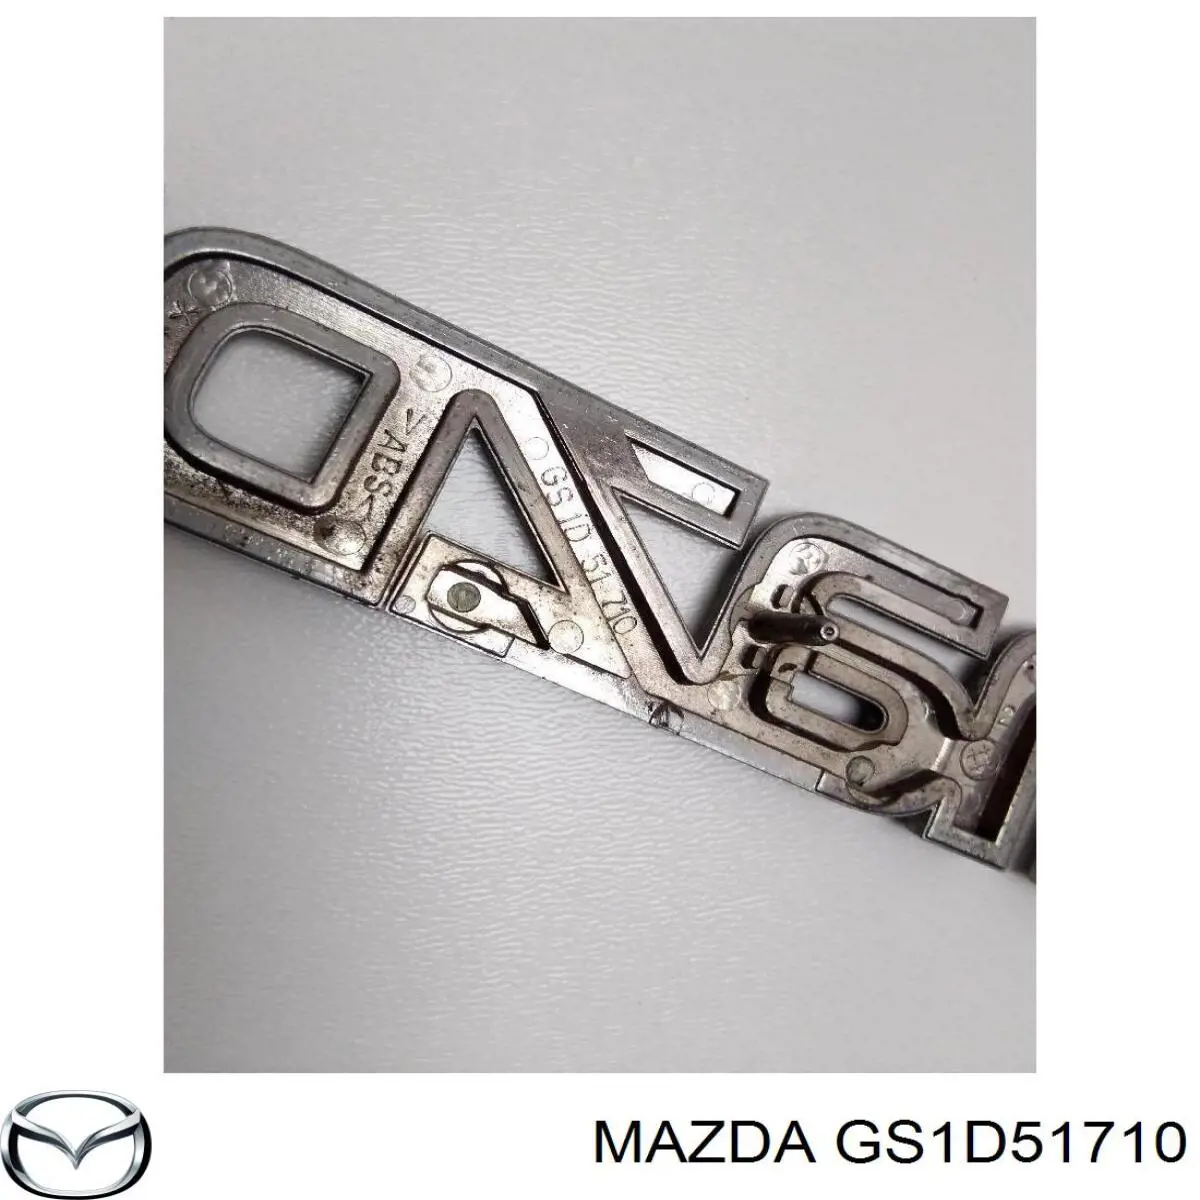 GS1D51710 Mazda emblema de tapa de maletero